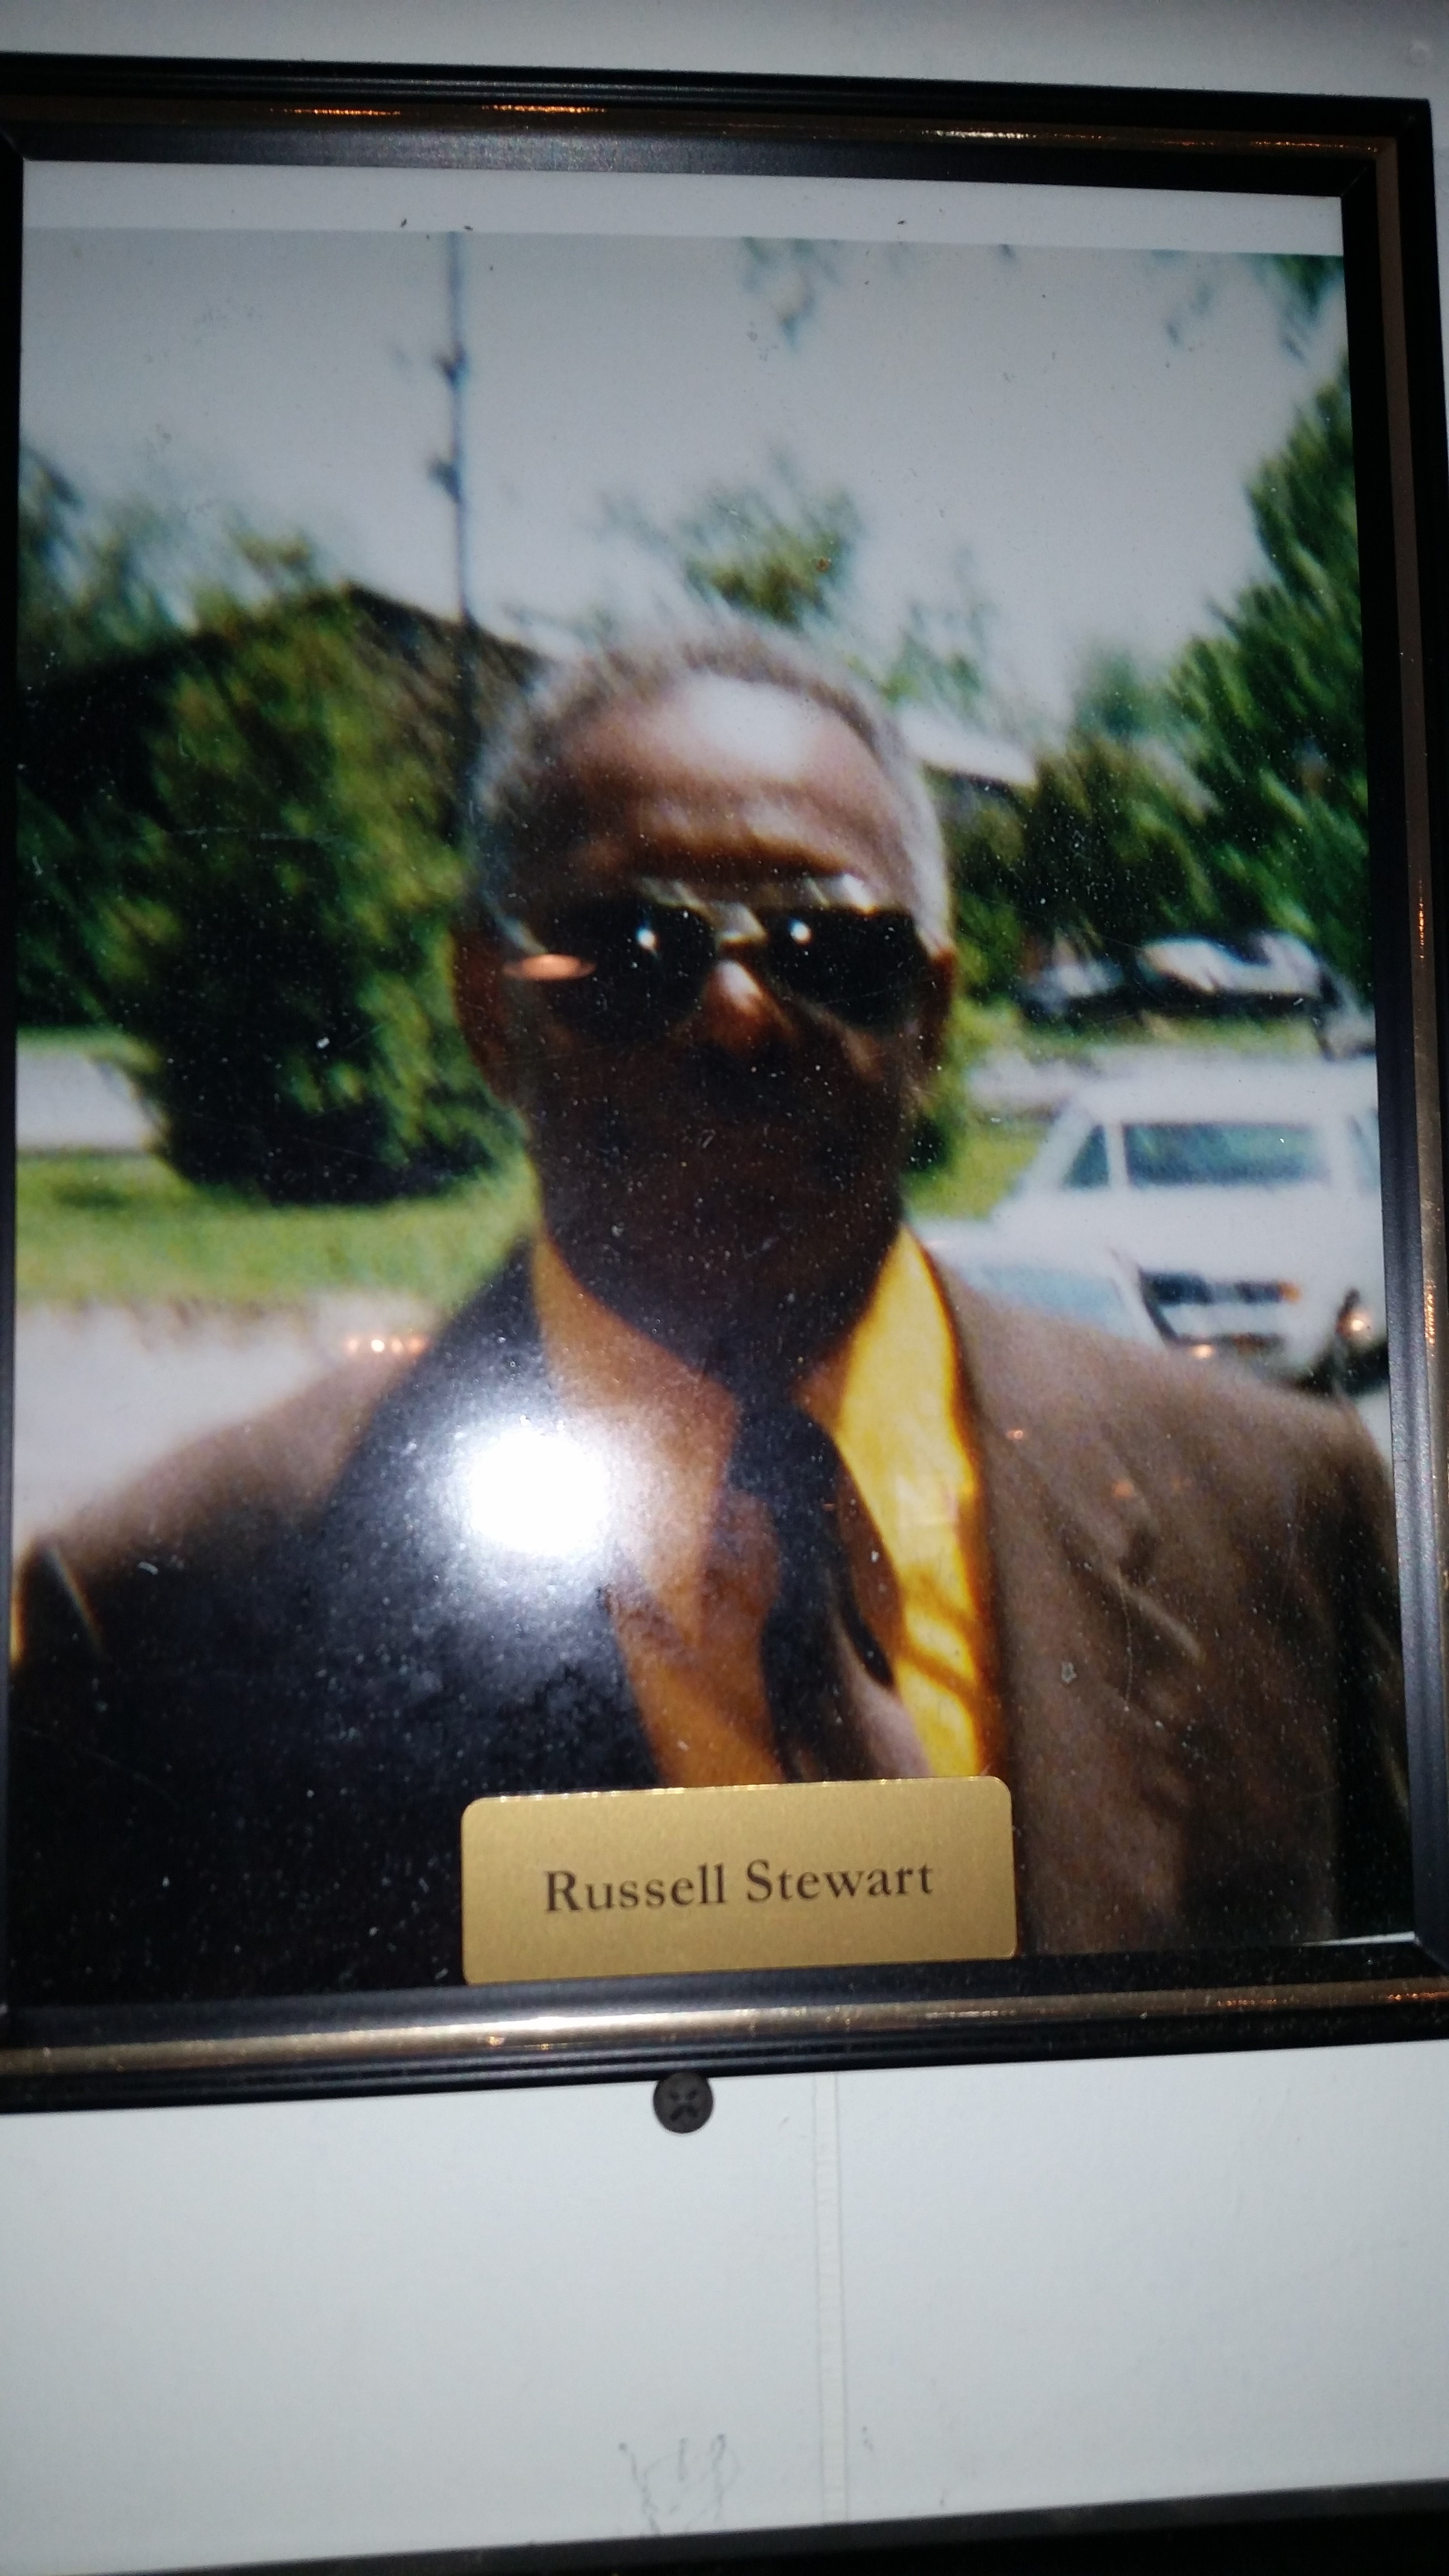 Mr. Russell Stewart